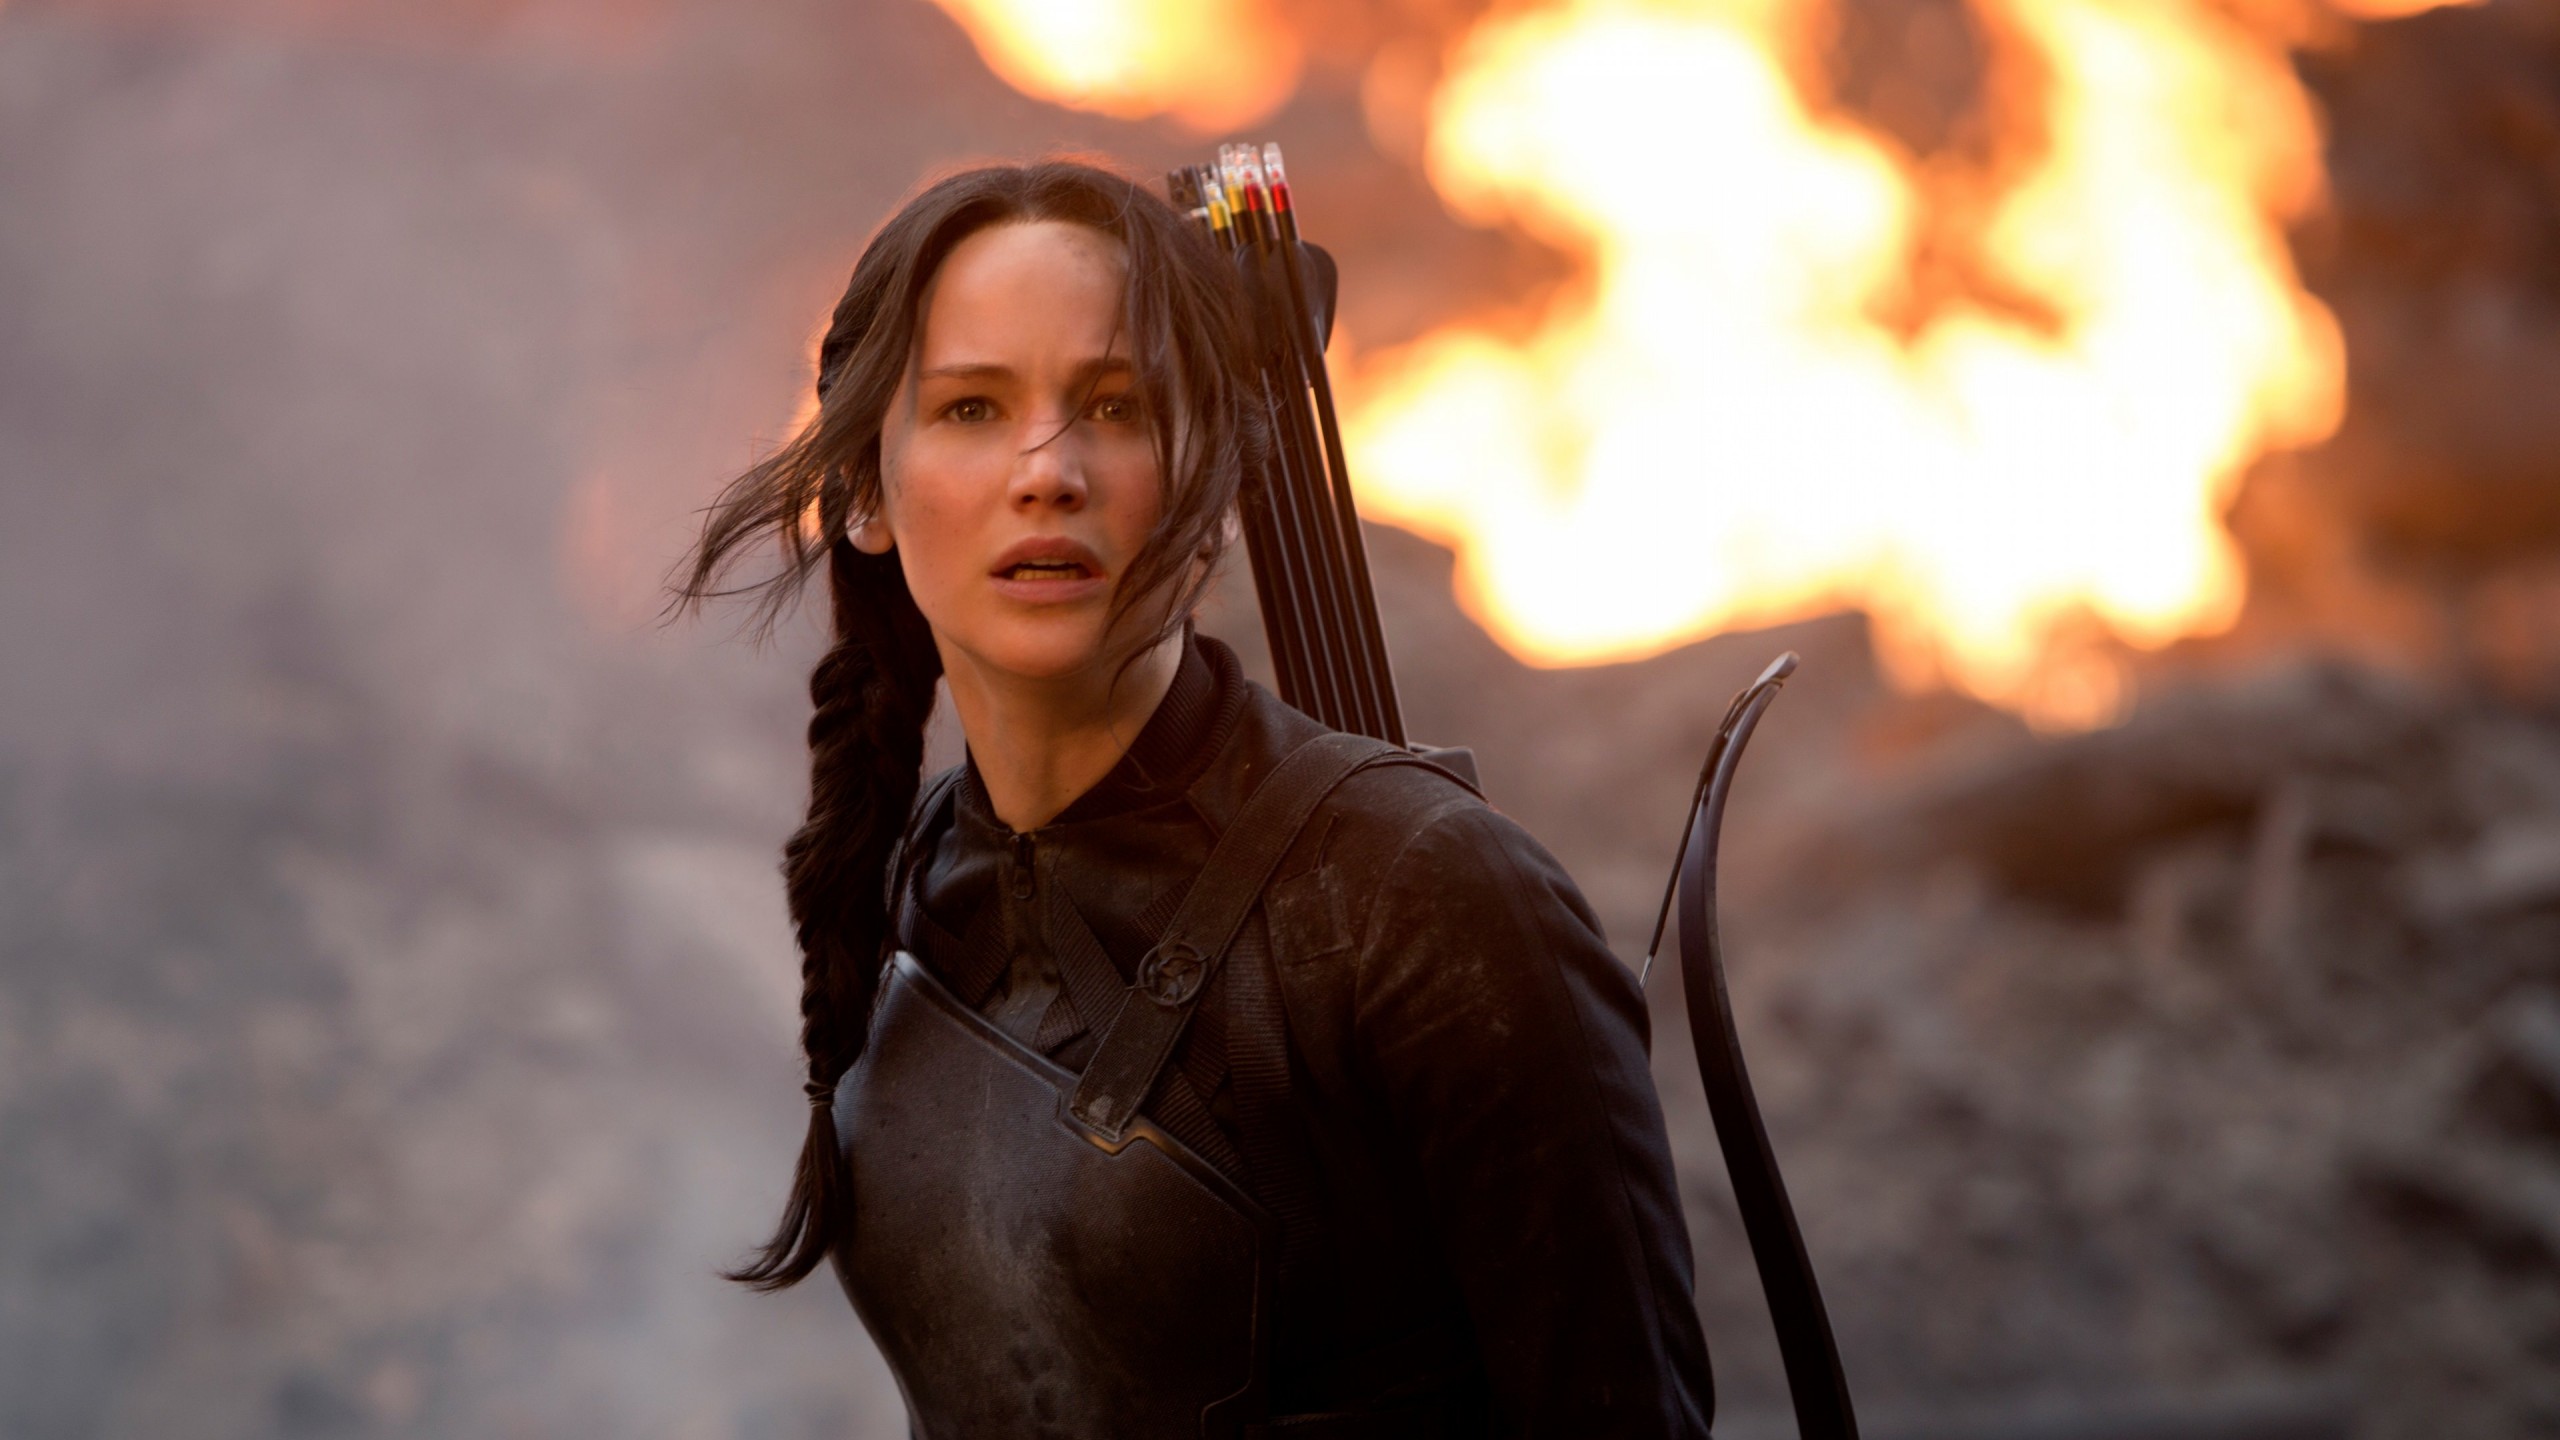 Jennifer Lawrence in The Hunger Games Wallpaper for Desktop 2560x1440